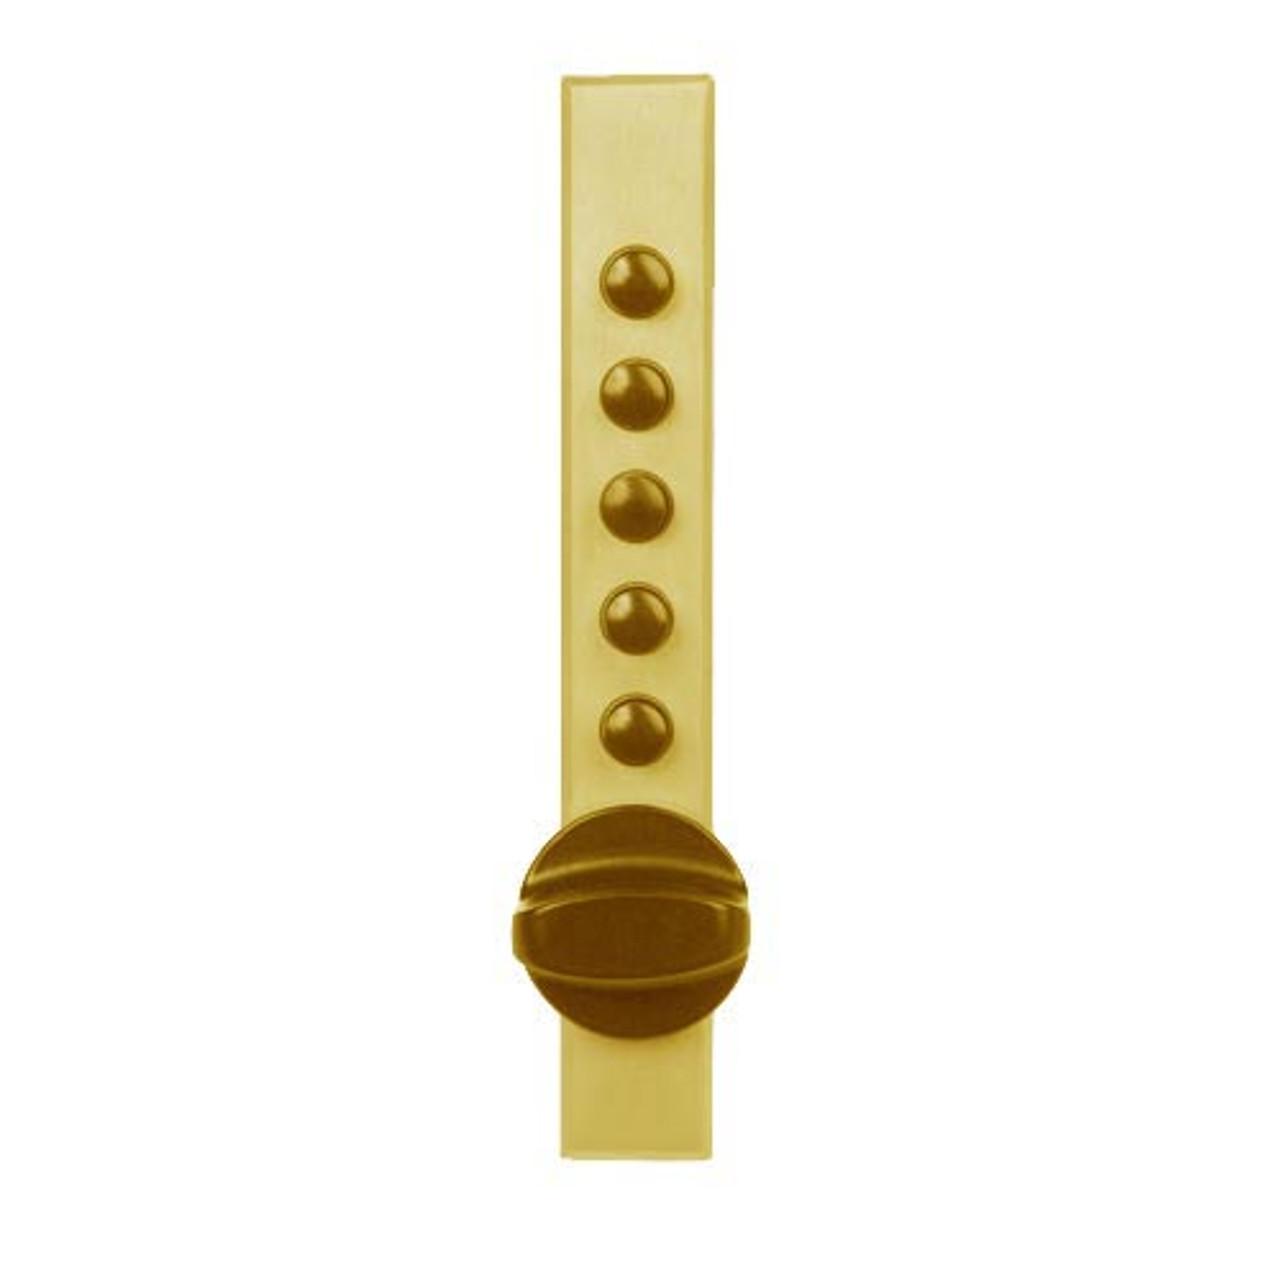 Simplex Cabinet Thumbturn Lock in Satin Brass Finish